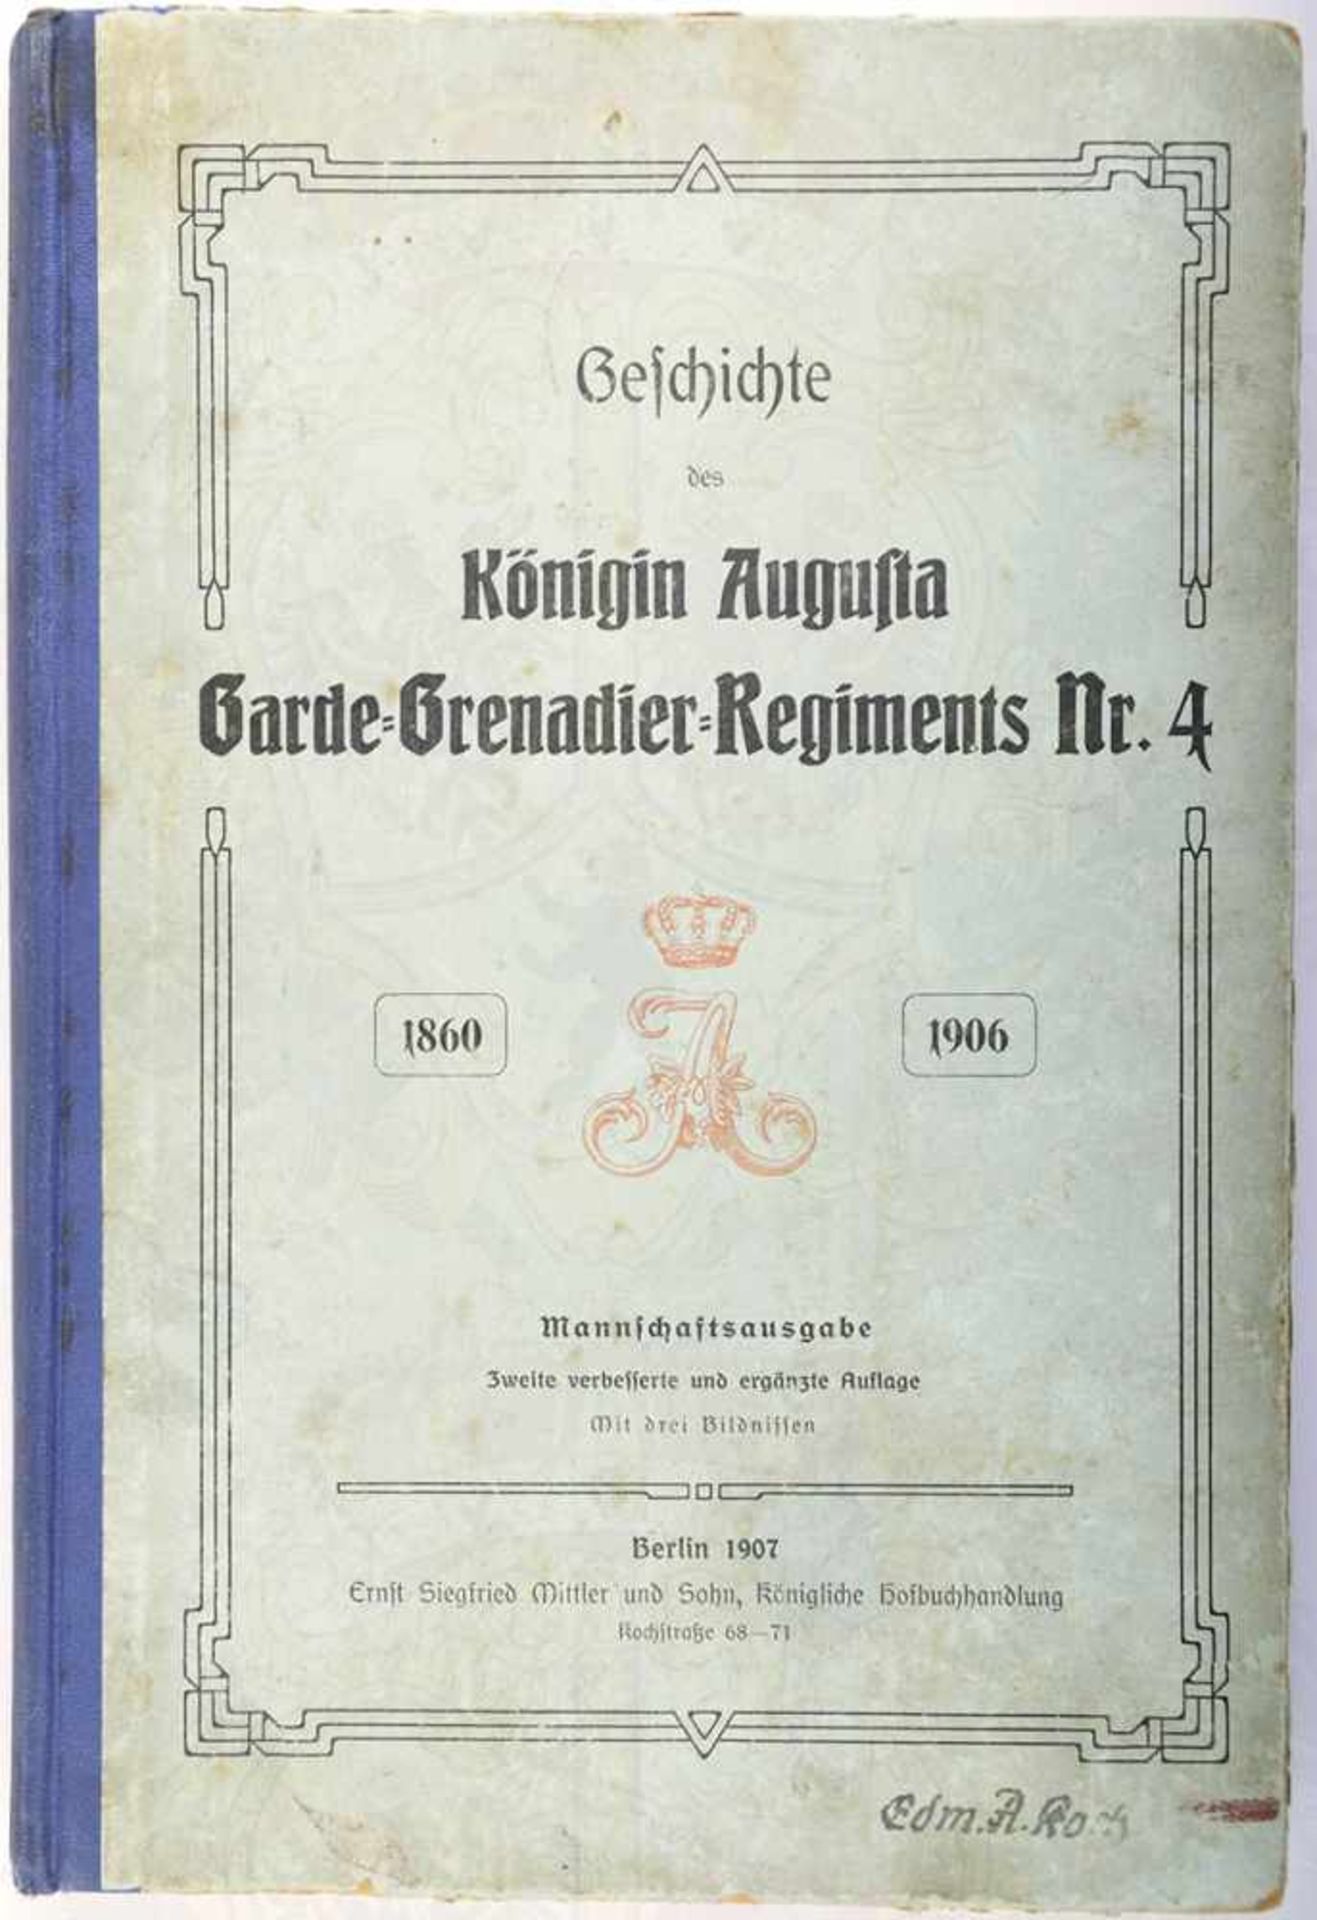 KÖNIGIN AUGUSTA GARDE-GRENADIER-REGIMENT NR. 4, 1860-1906, Mannschaftsausgabe, Berlin 1907, 358